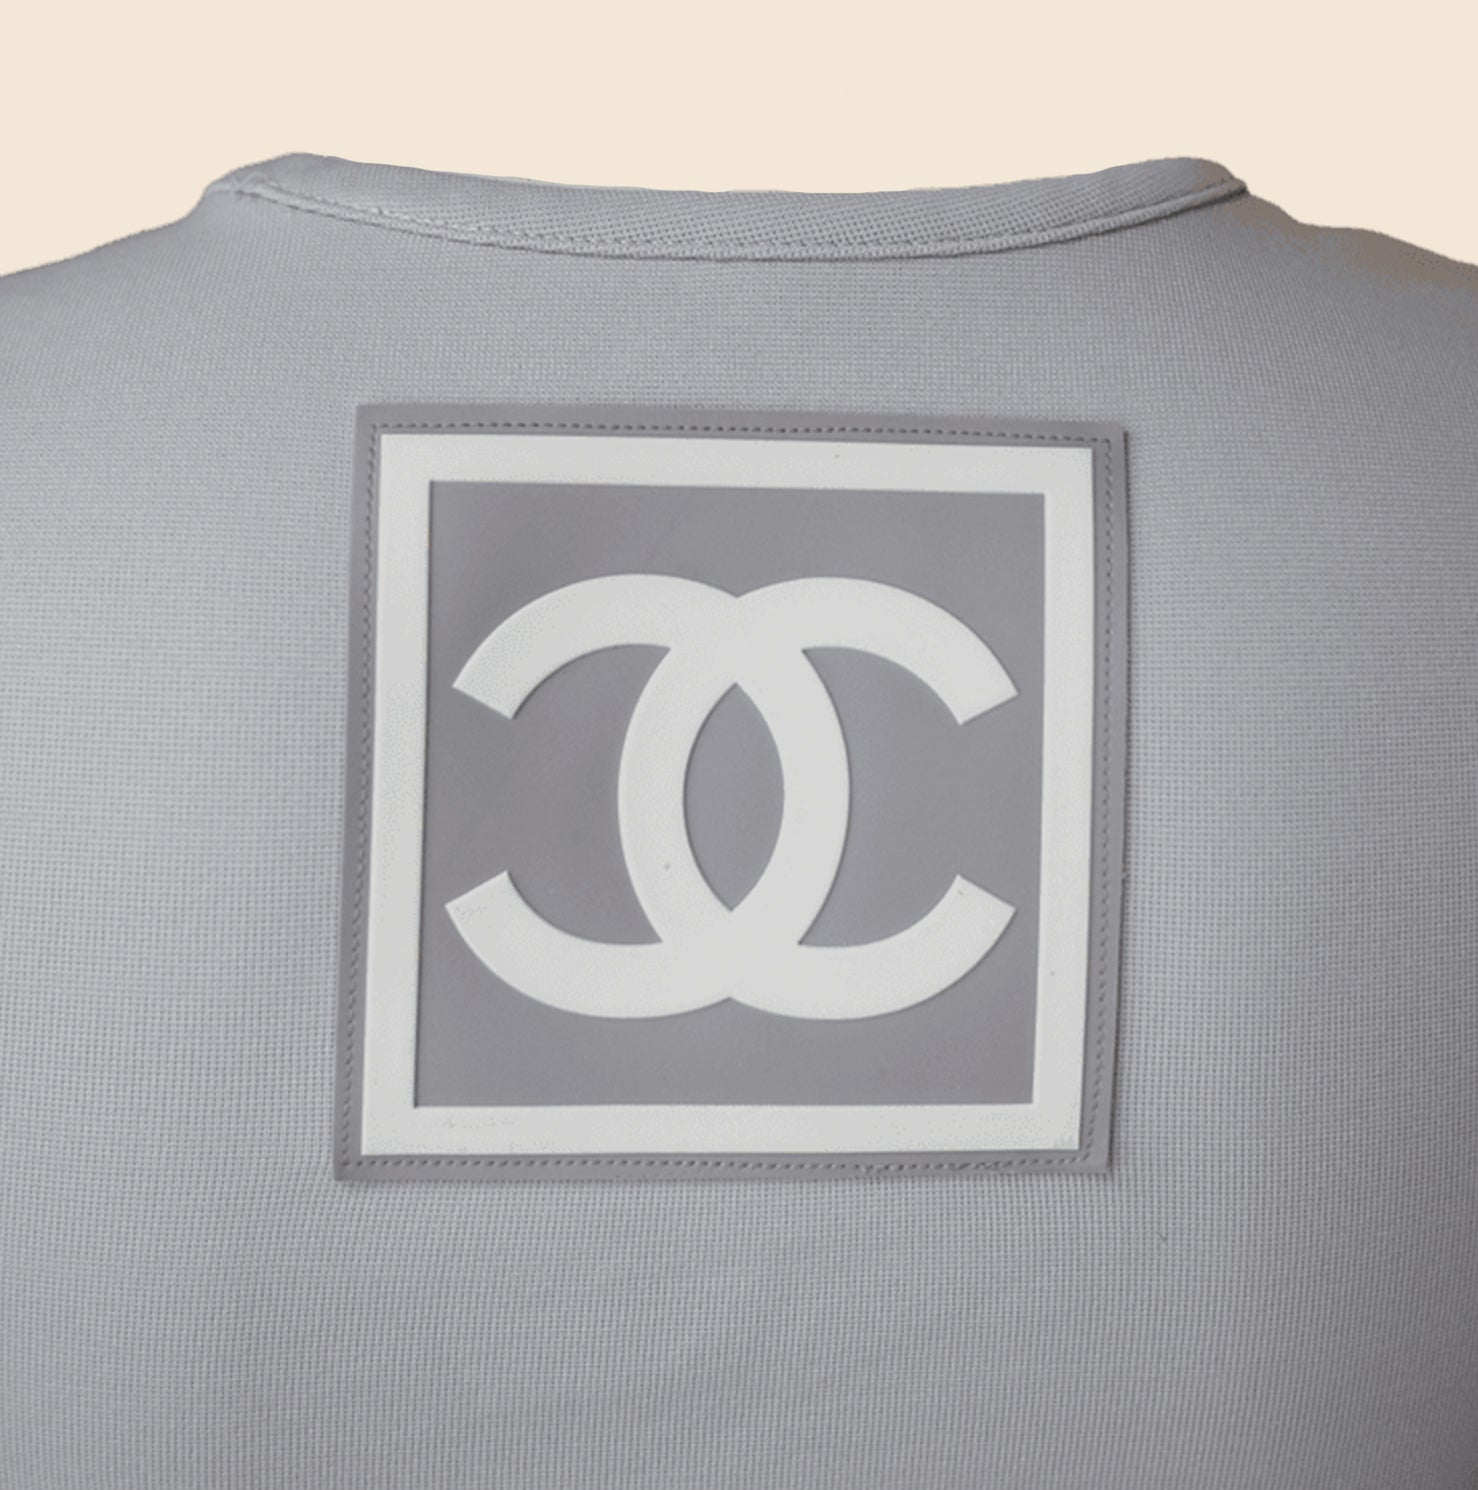 Vintage Chanel Logo White Top 